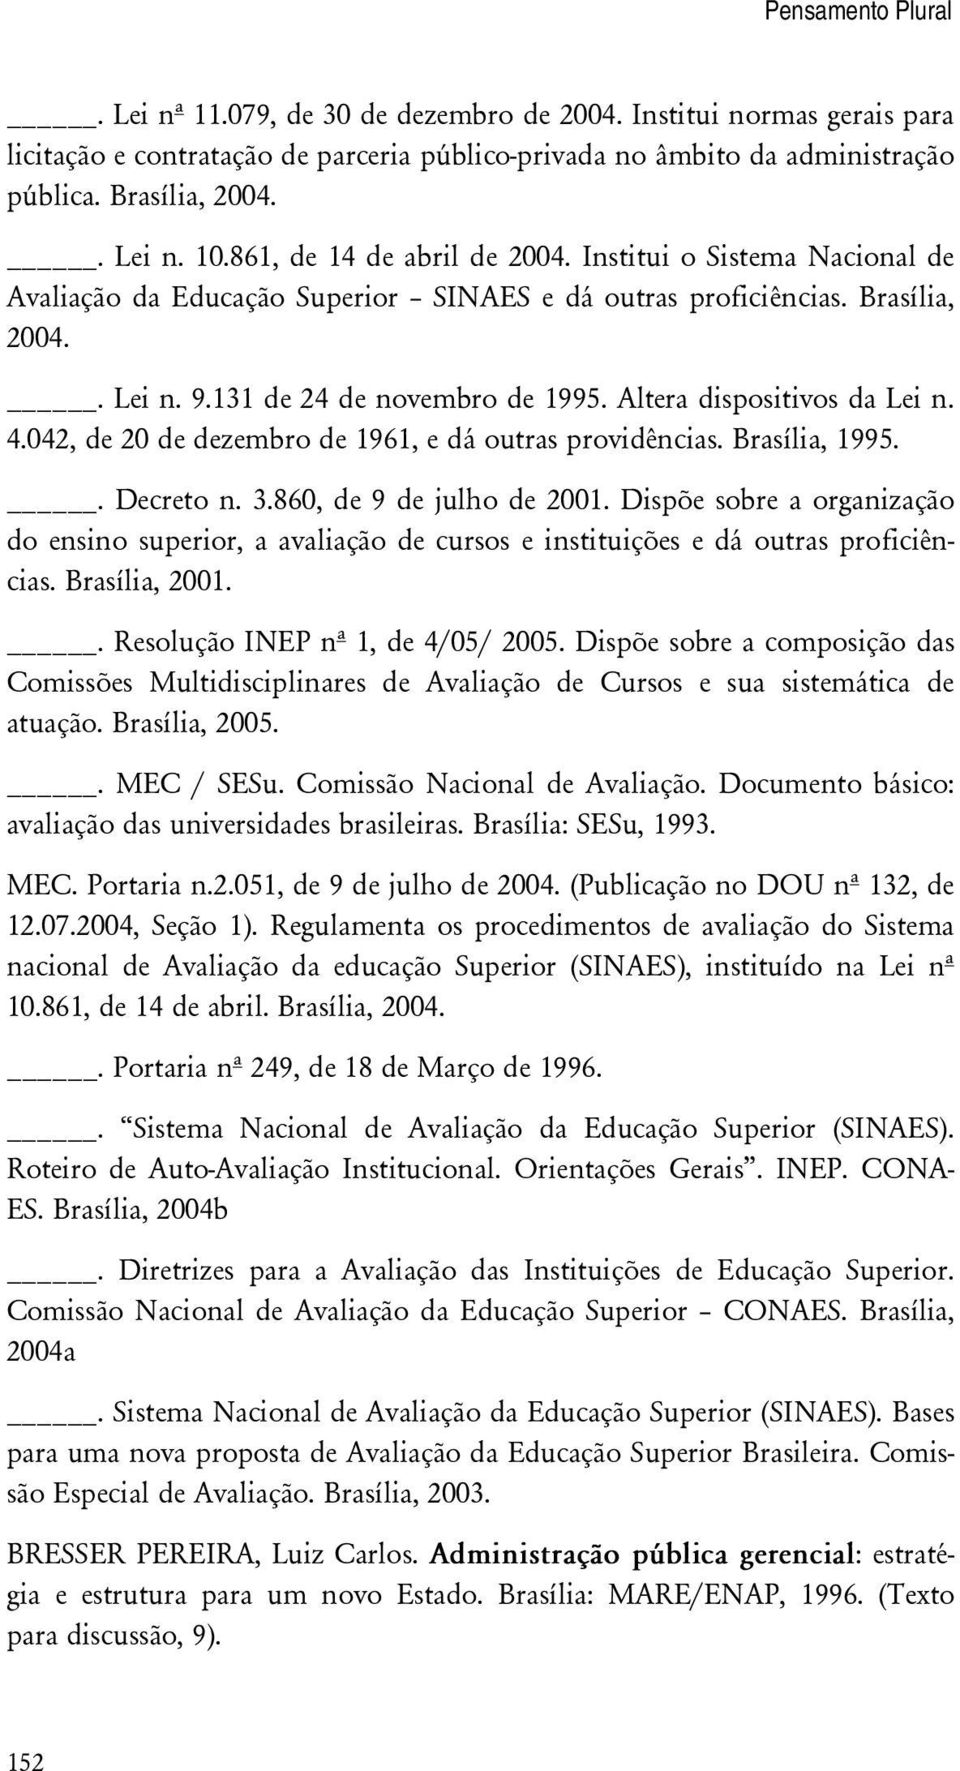 Altera dispositivos da Lei n. 4.042, de 20 de dezembro de 1961, e dá outras providências. Brasília, 1995.. Decreto n. 3.860, de 9 de julho de 2001.